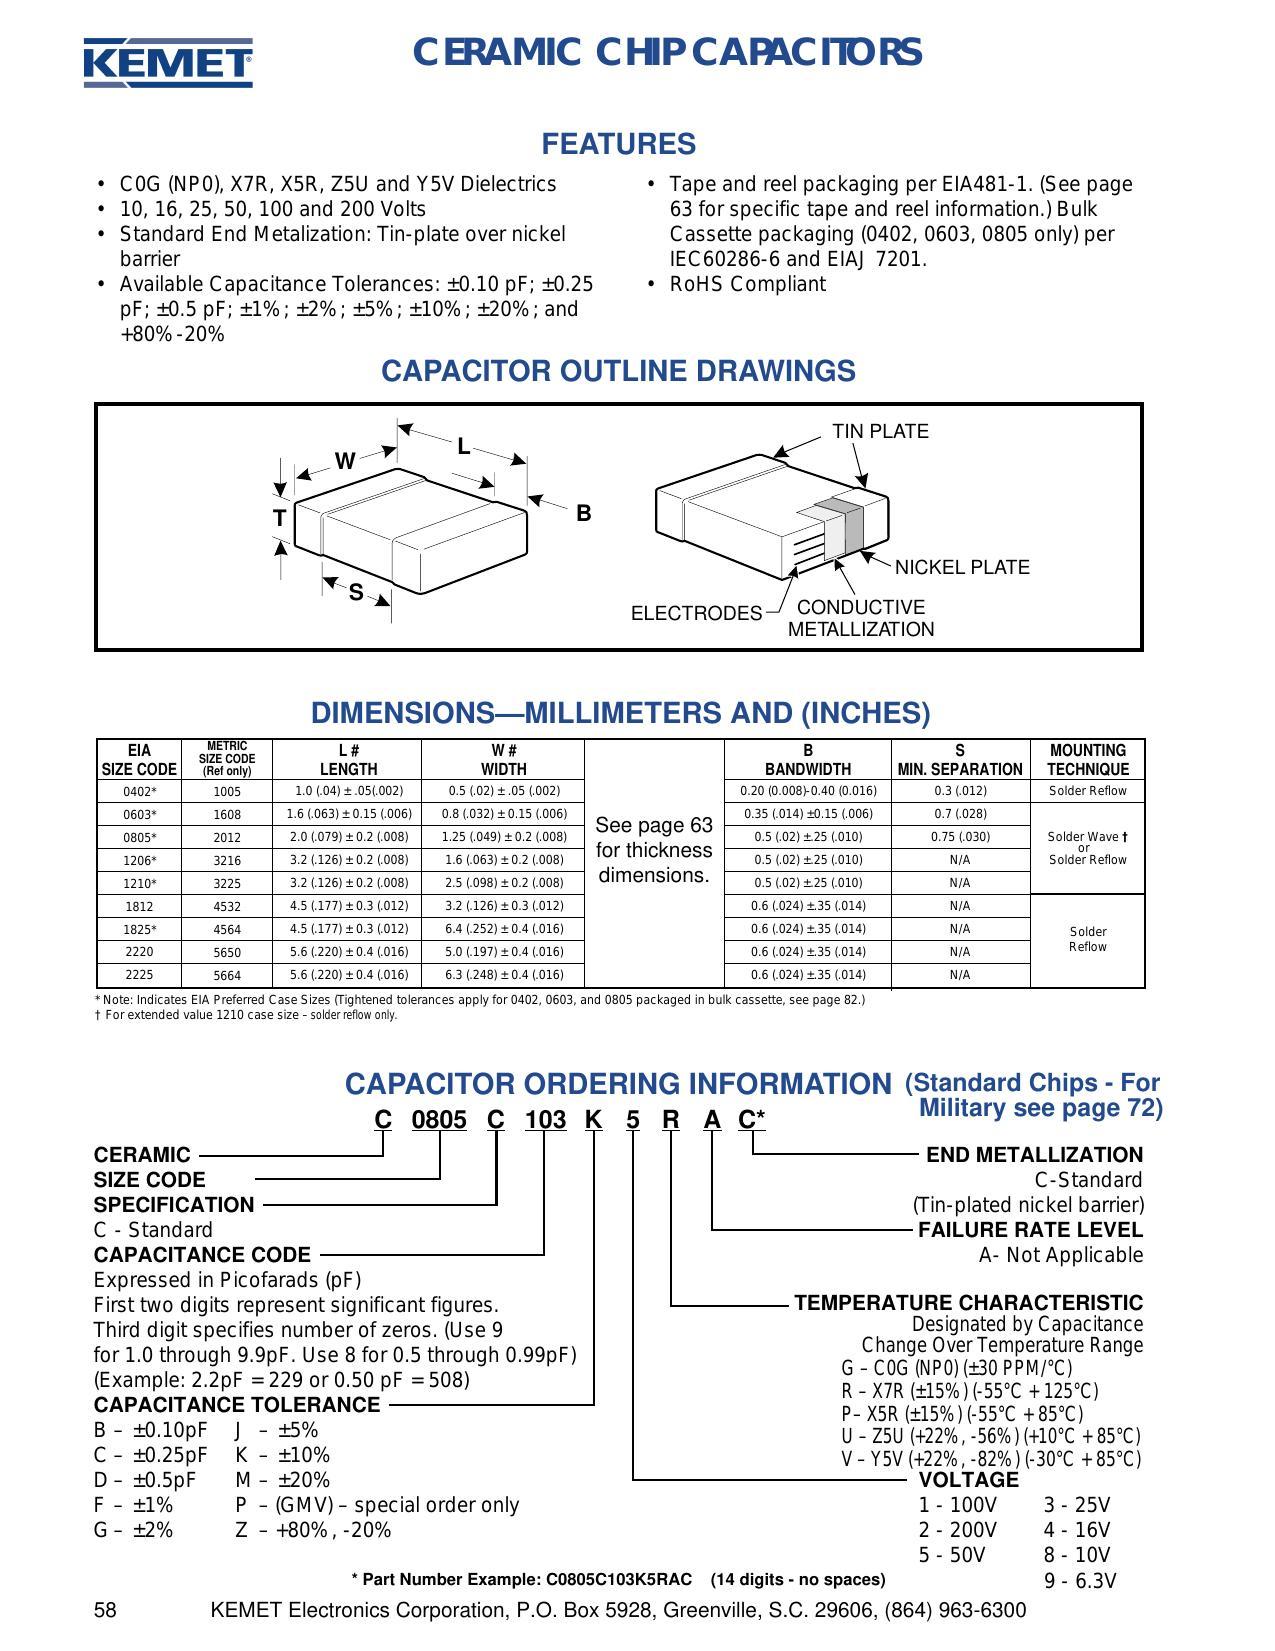 kemet-ceramic-chip-capacitors-datasheet.pdf